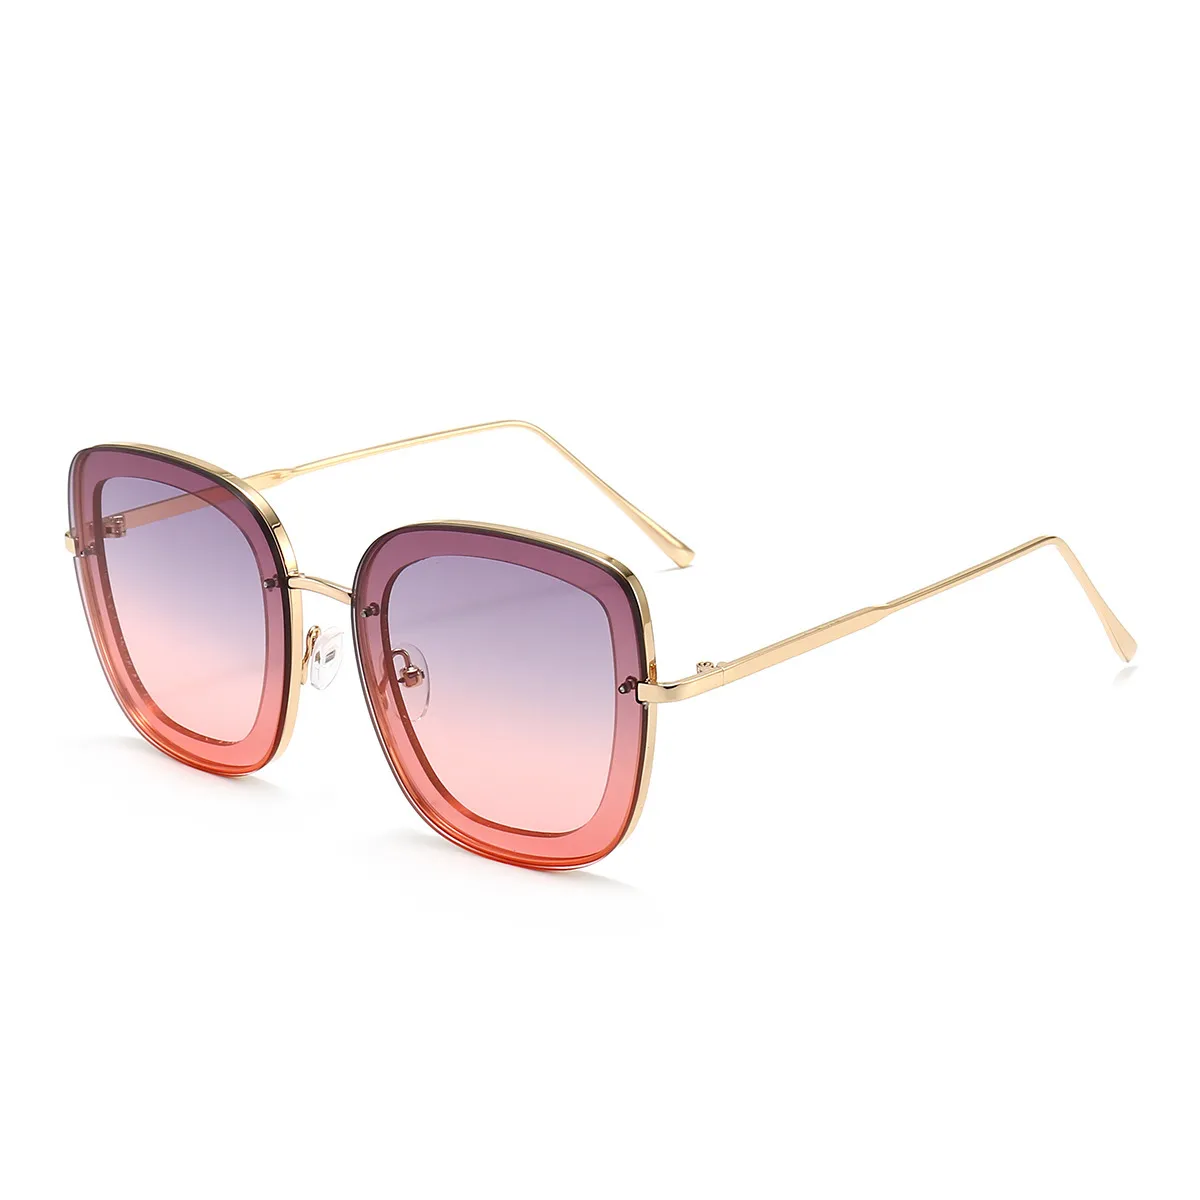 Luxe Designer Fashion Square Sunglasses voor Dames Mannen Square Oversize Unisex Zonnebril JC8875